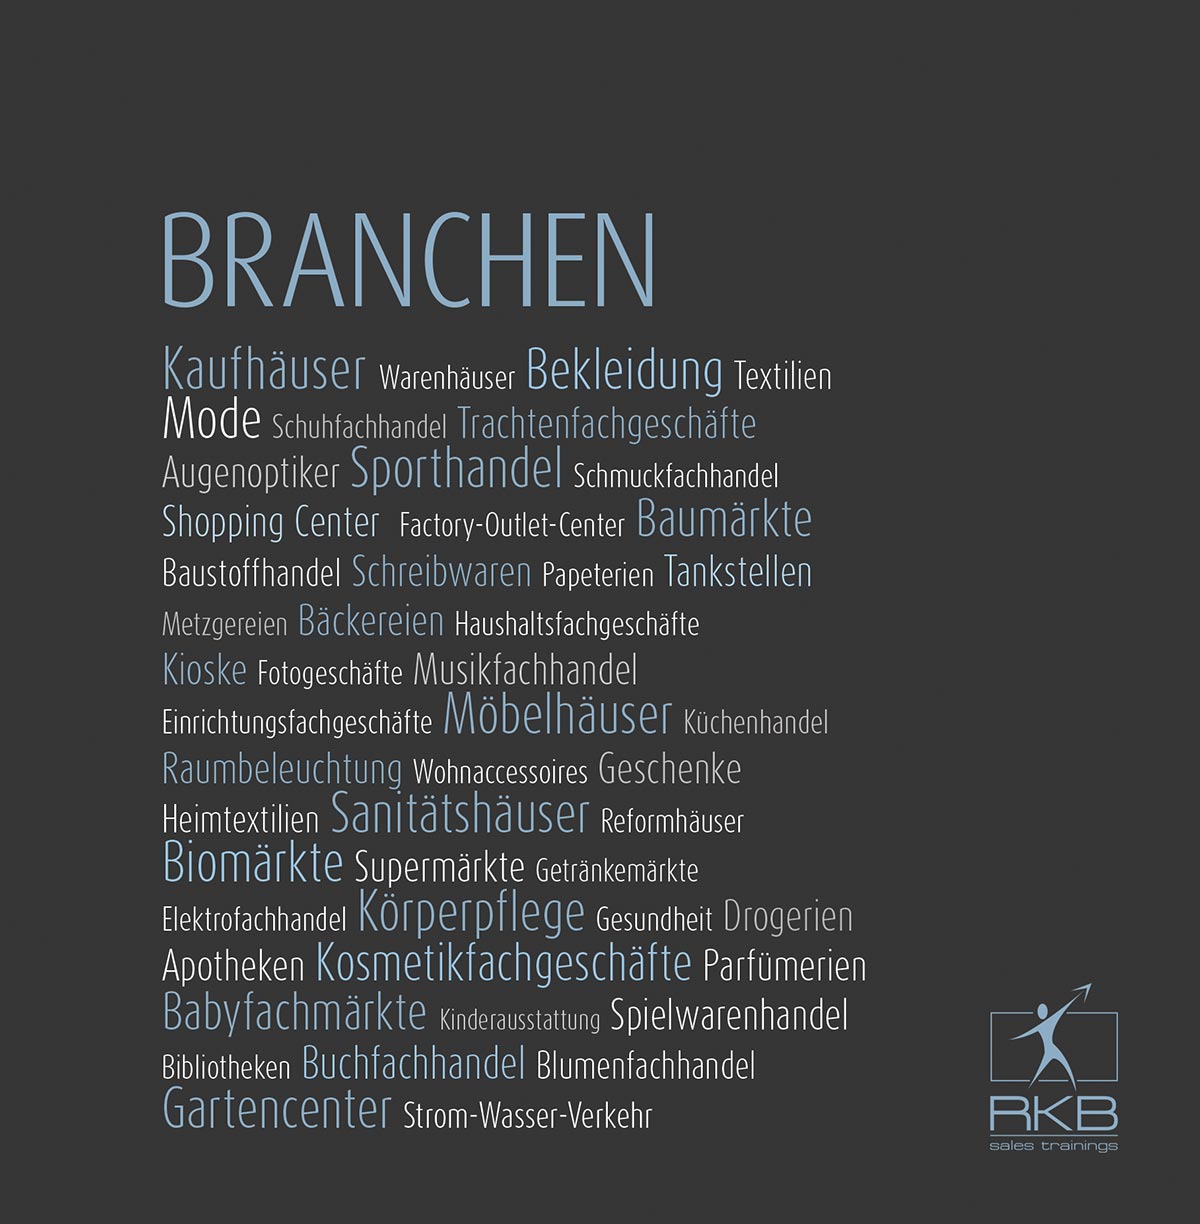 RKB sales trainings Branchen